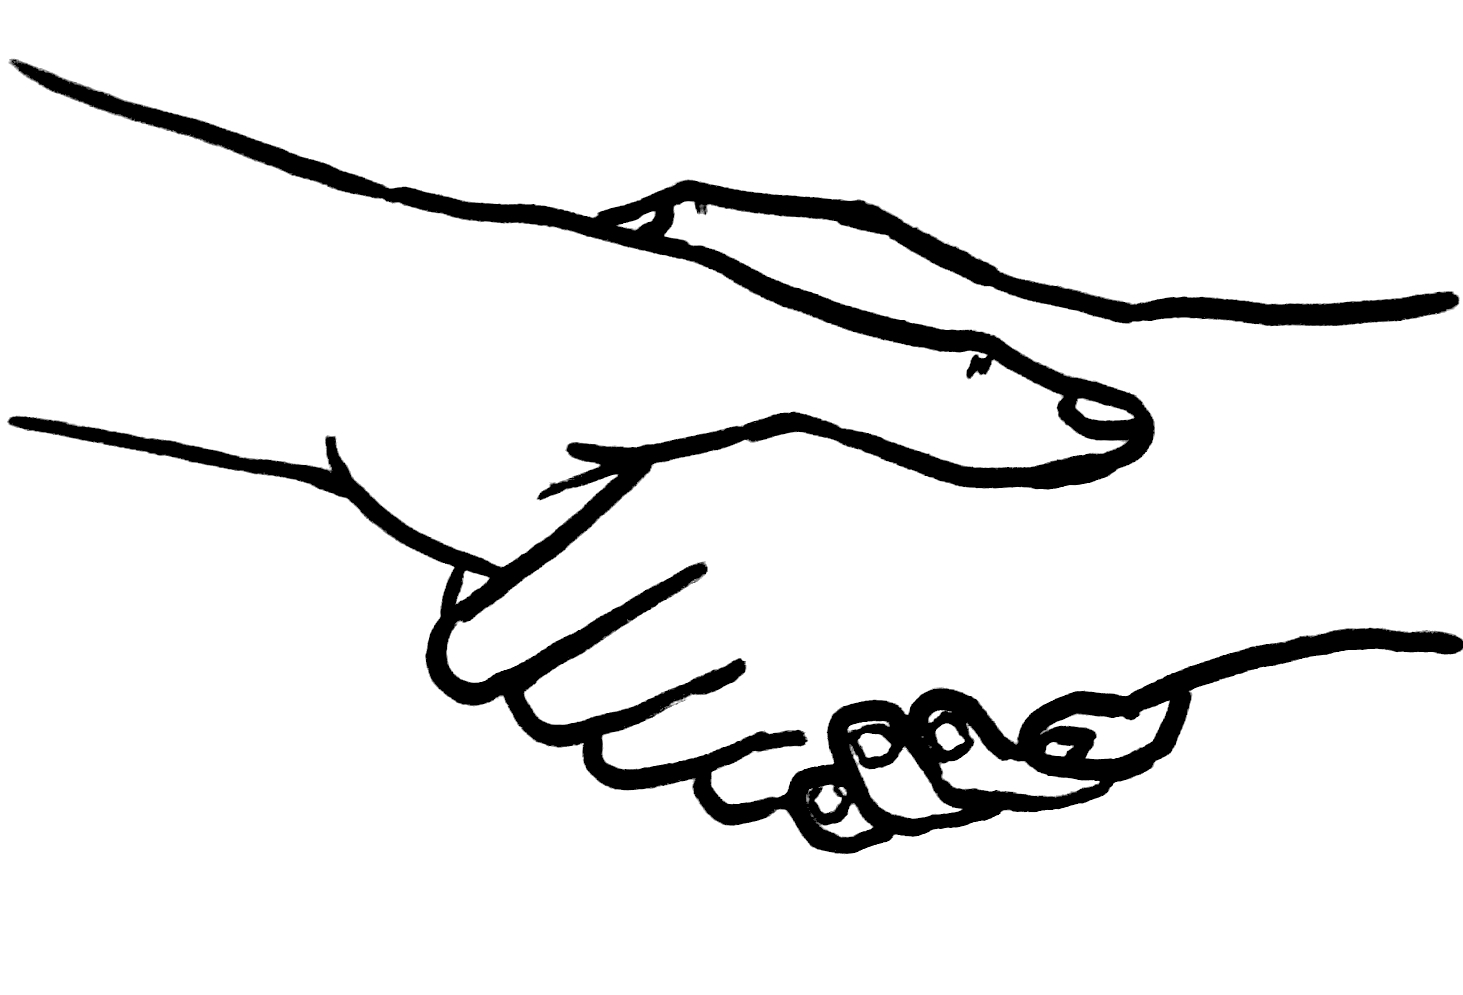 Handshake shaking hands clip art at vector clip art 2 image